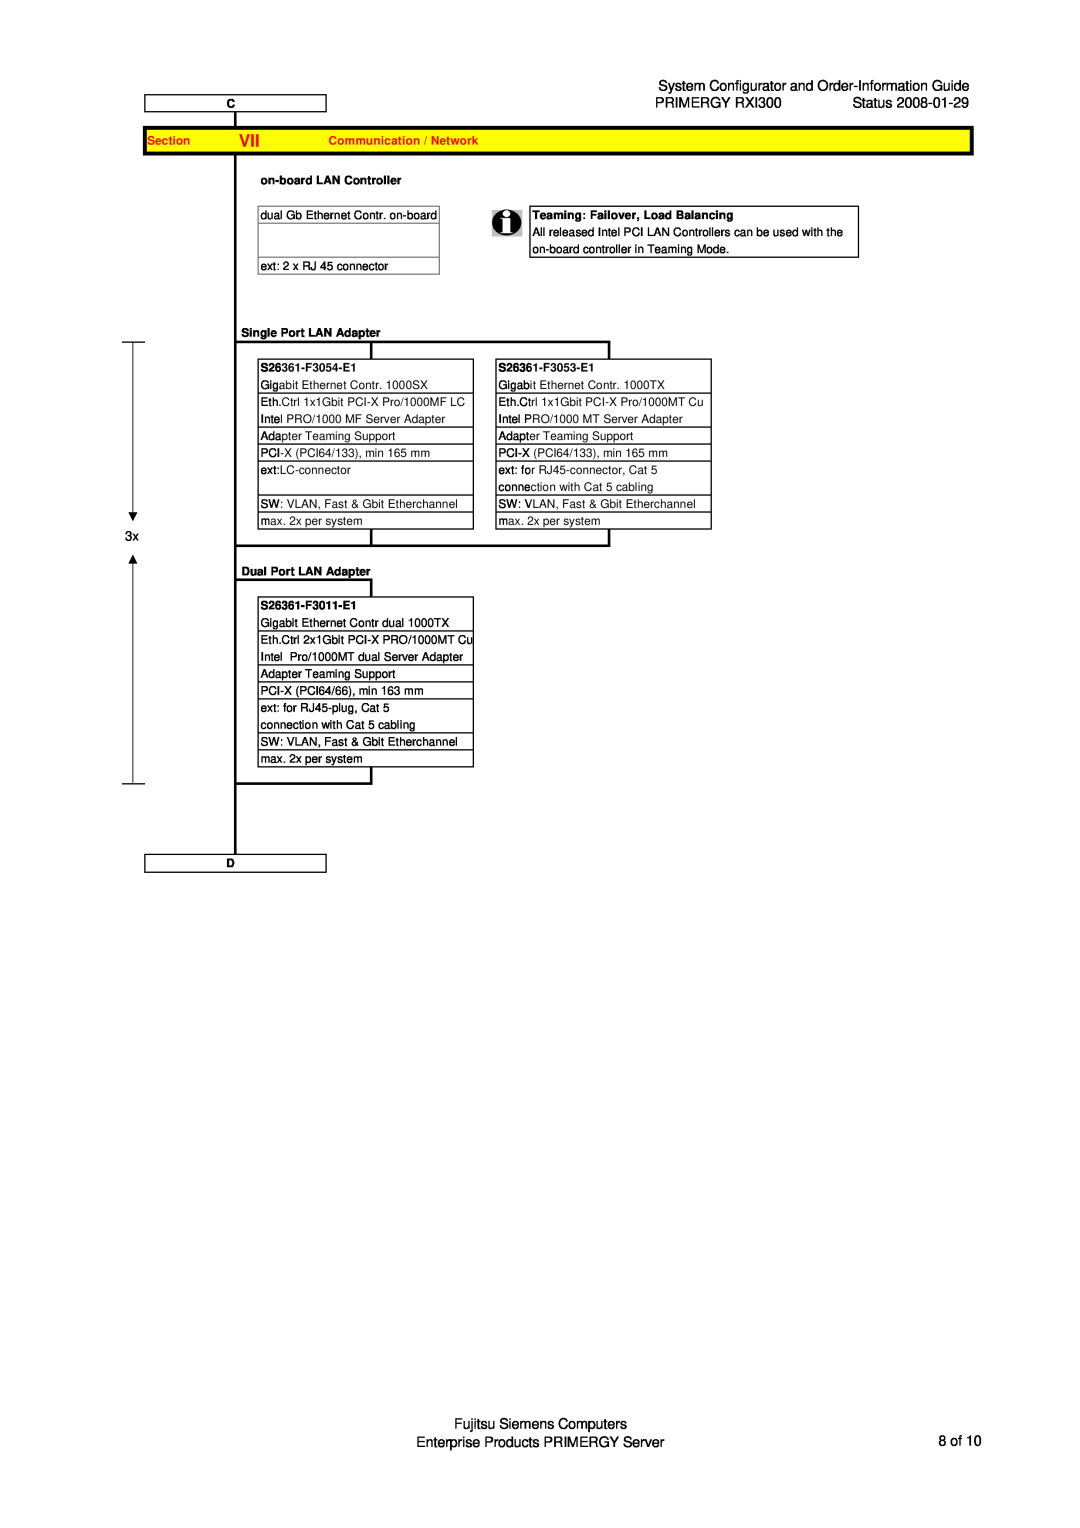 Fujitsu manual System Configurator and Order-Information Guide, PRIMERGY RXI300, Fujitsu Siemens Computers, Section 